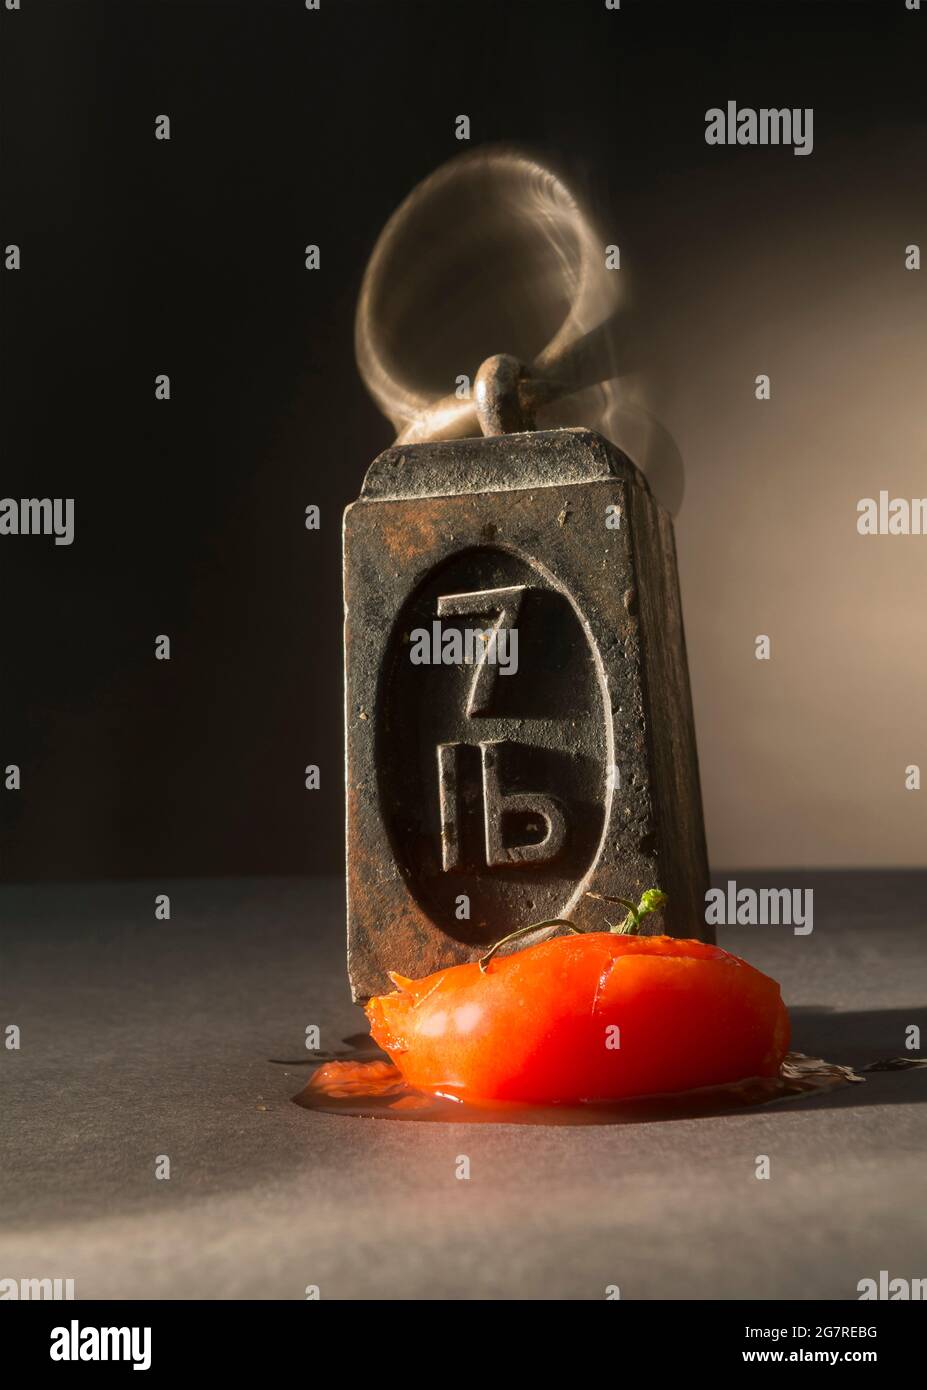 A seven pound weight squashing a tomato Stock Photo